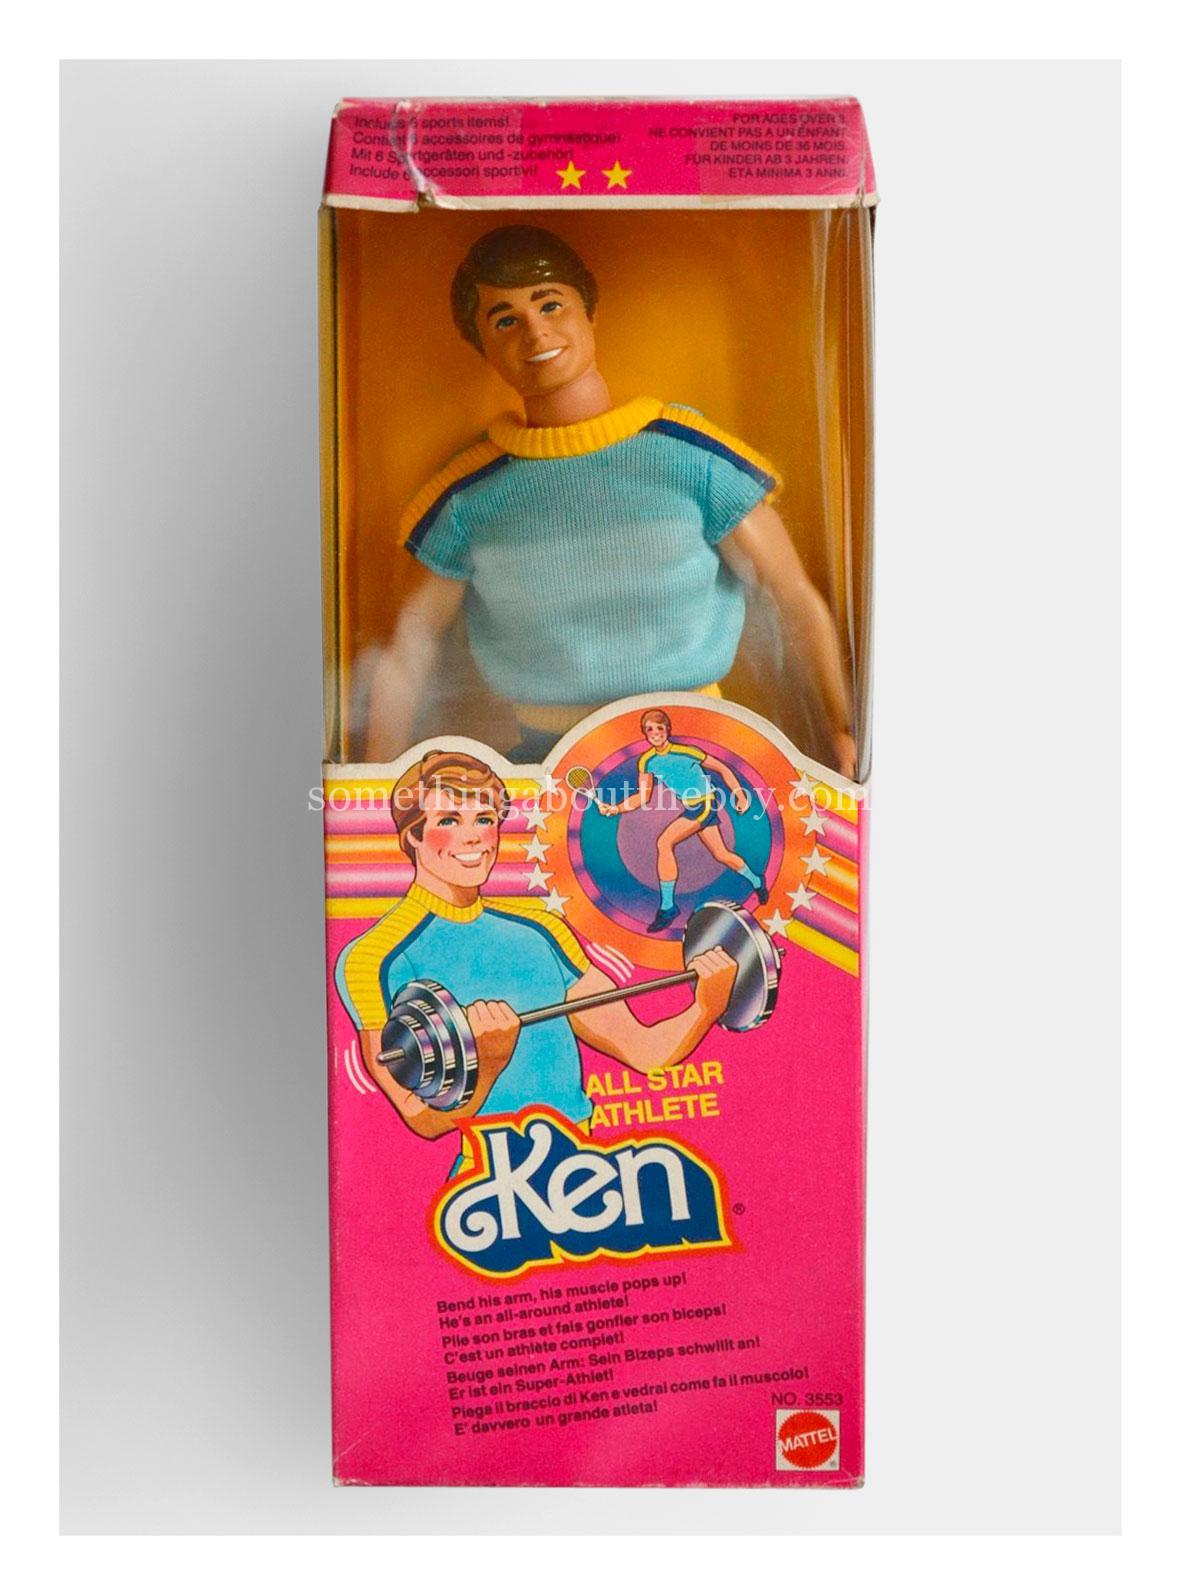 1982 #3553 All Star Ken in European packaging